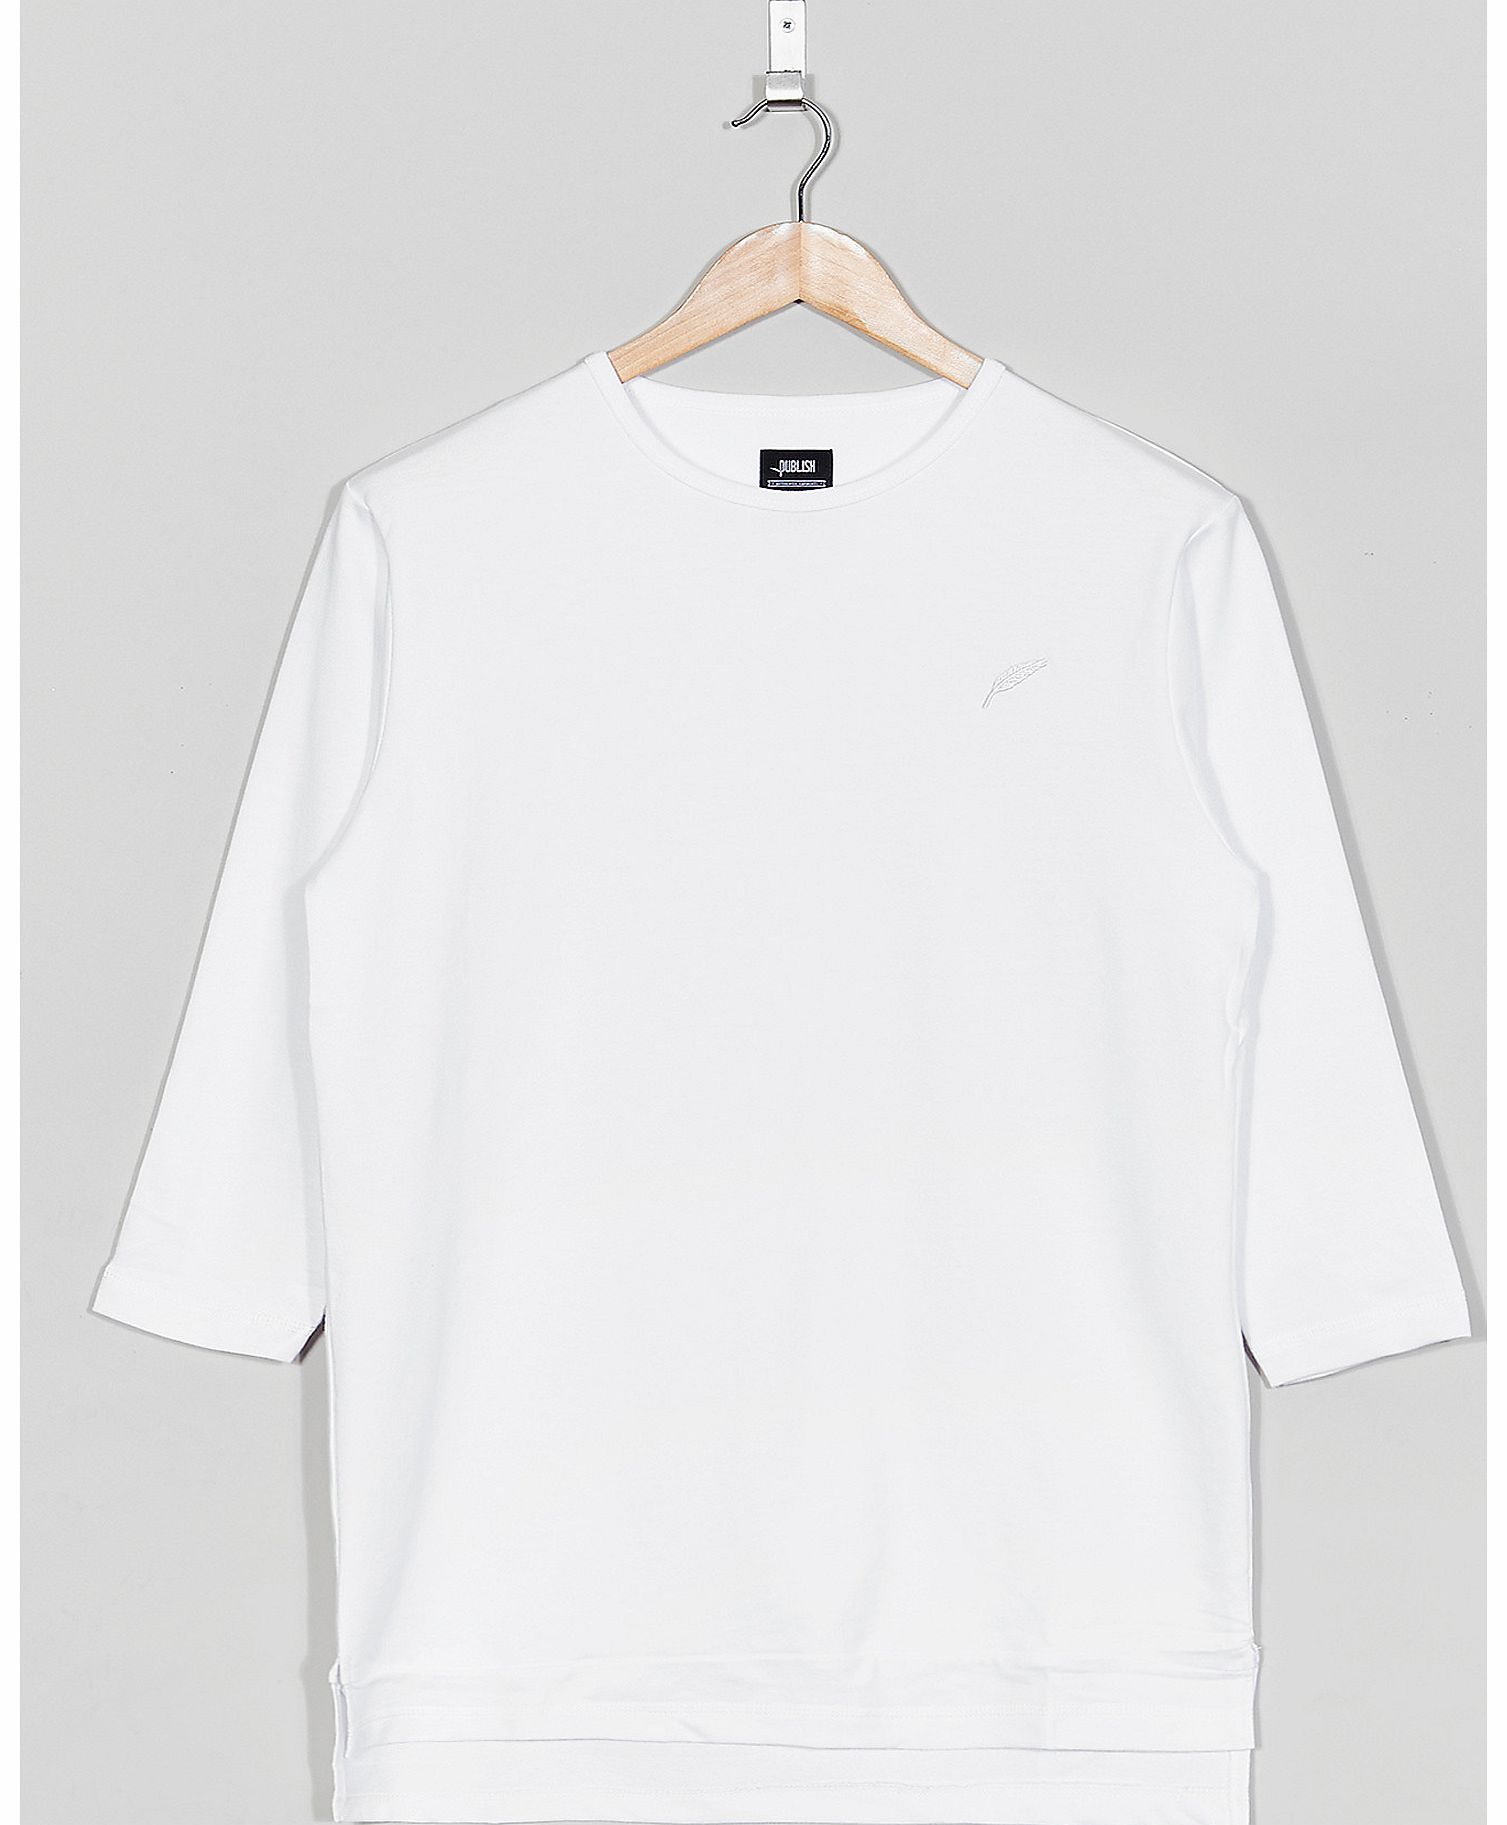 Everit 3/4 Plain T-Shirt